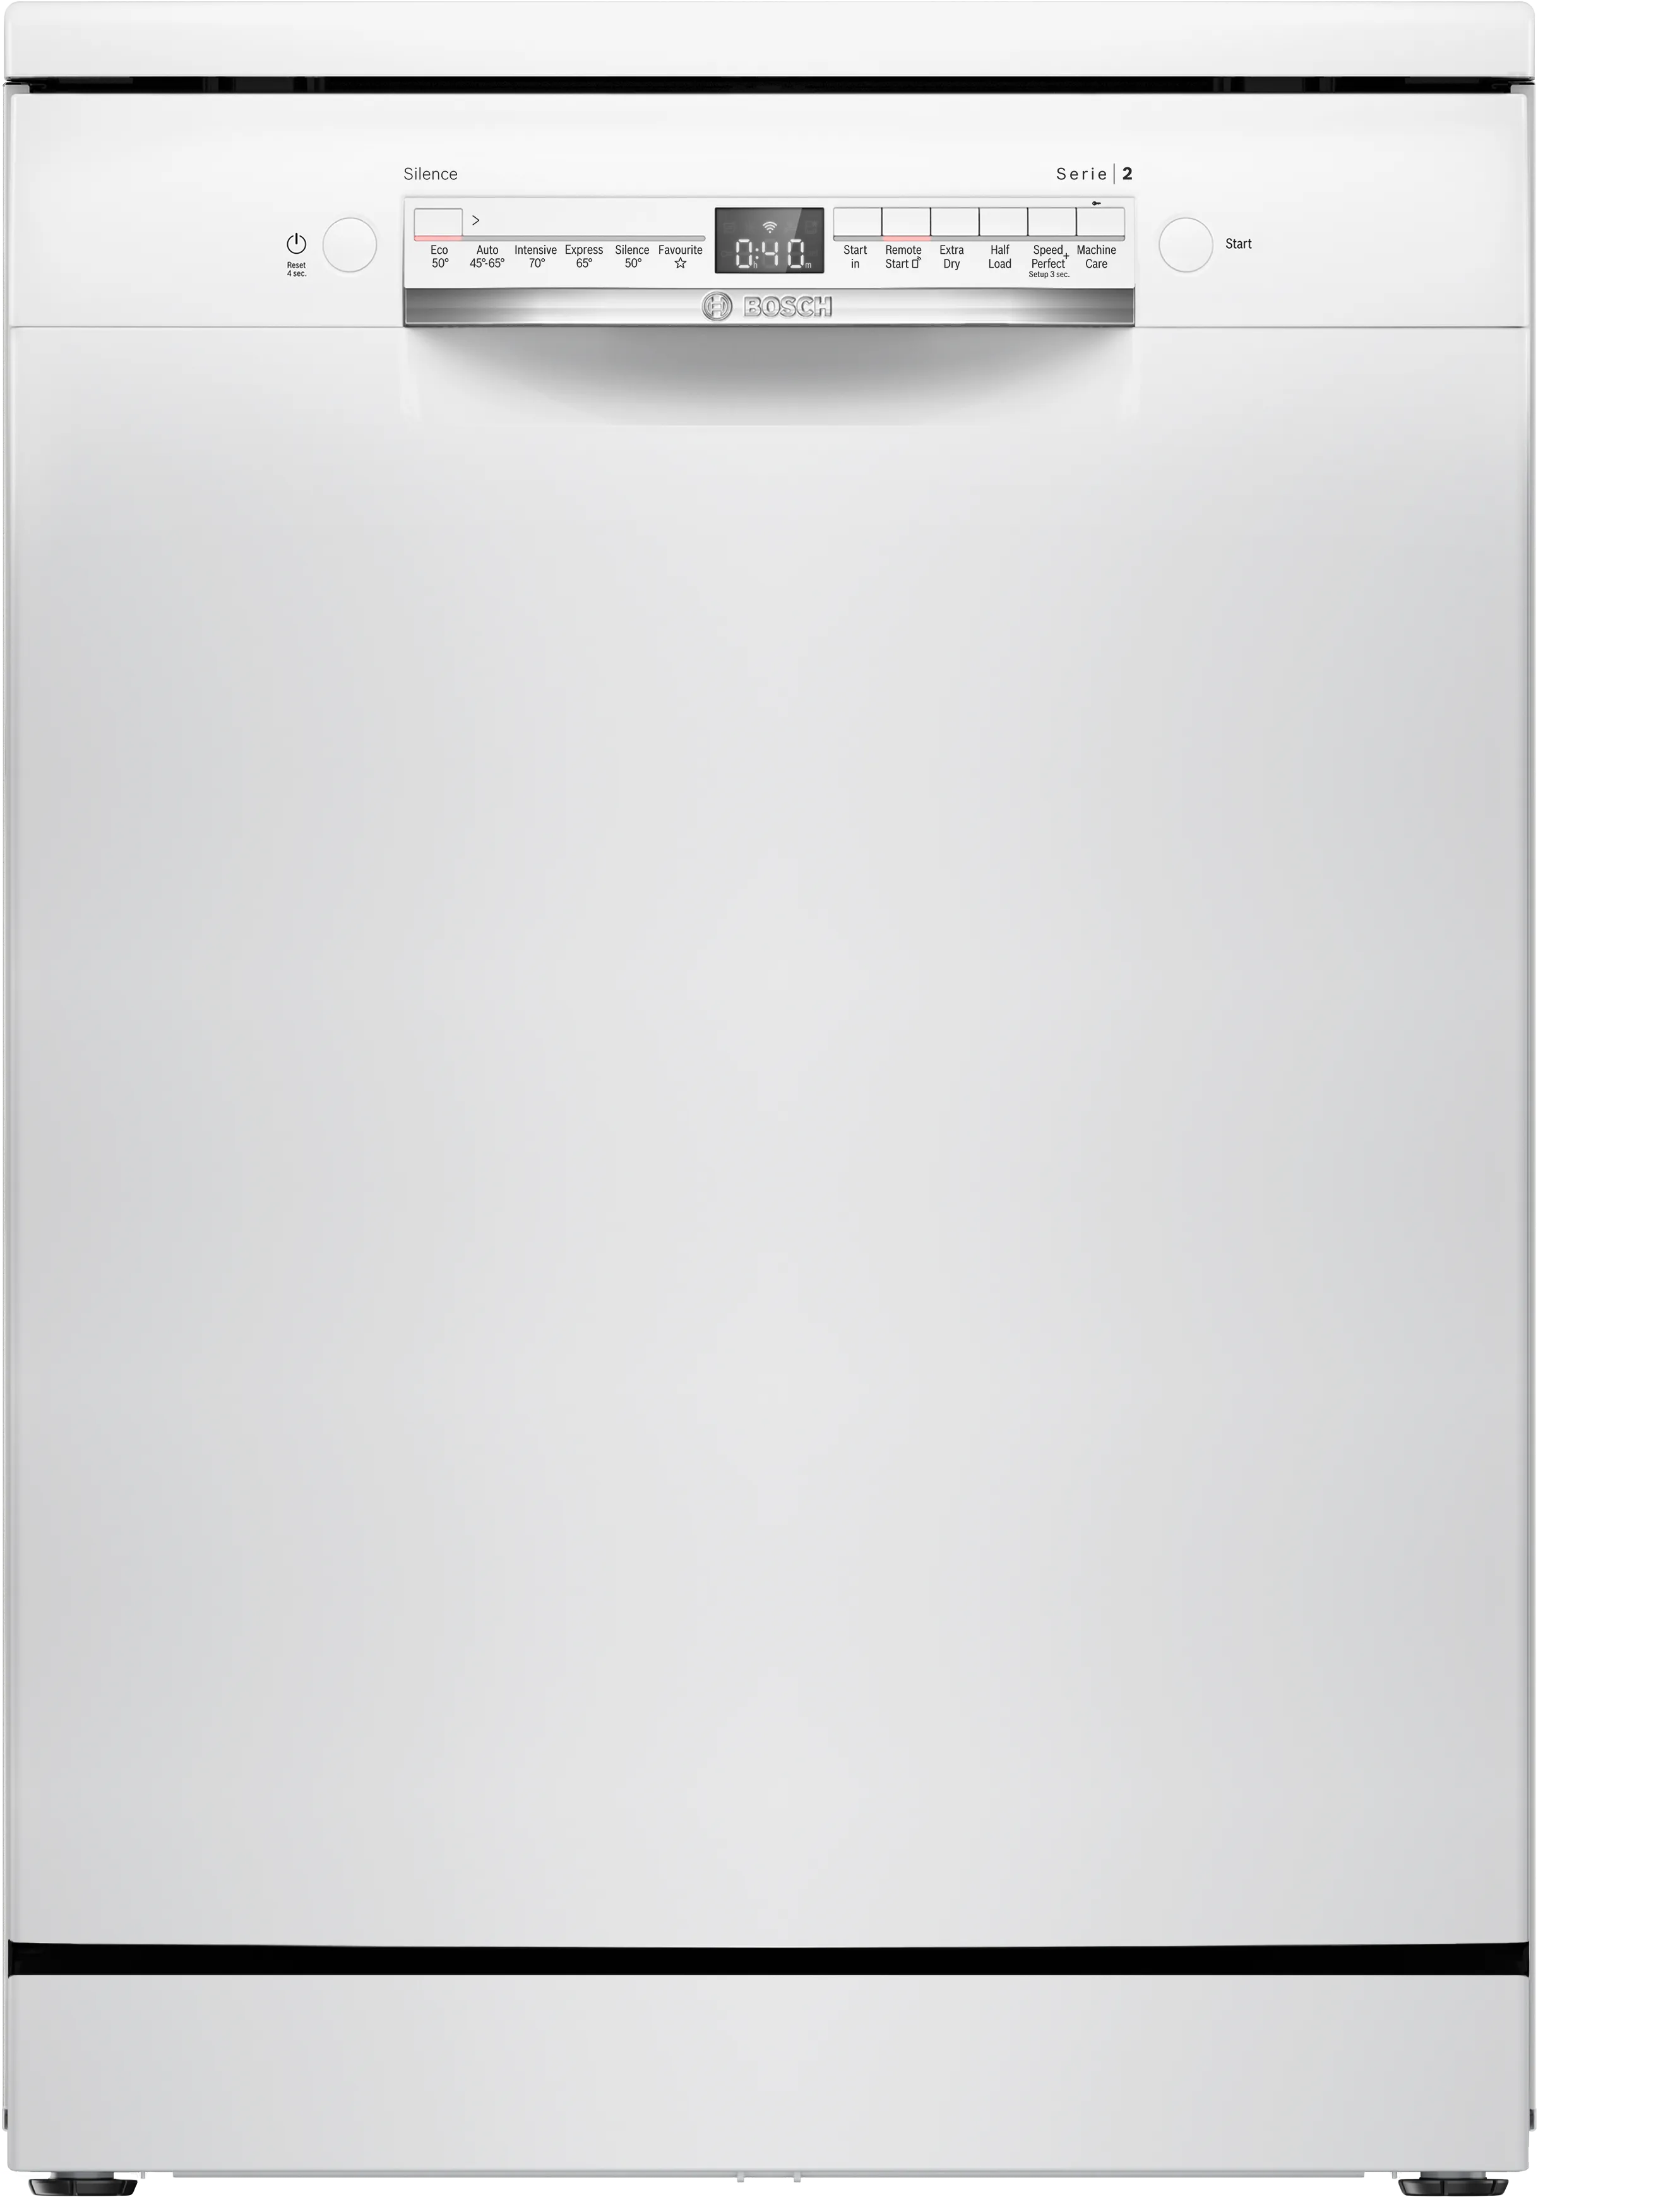 Series 2 free-standing dishwasher 60 cm White 